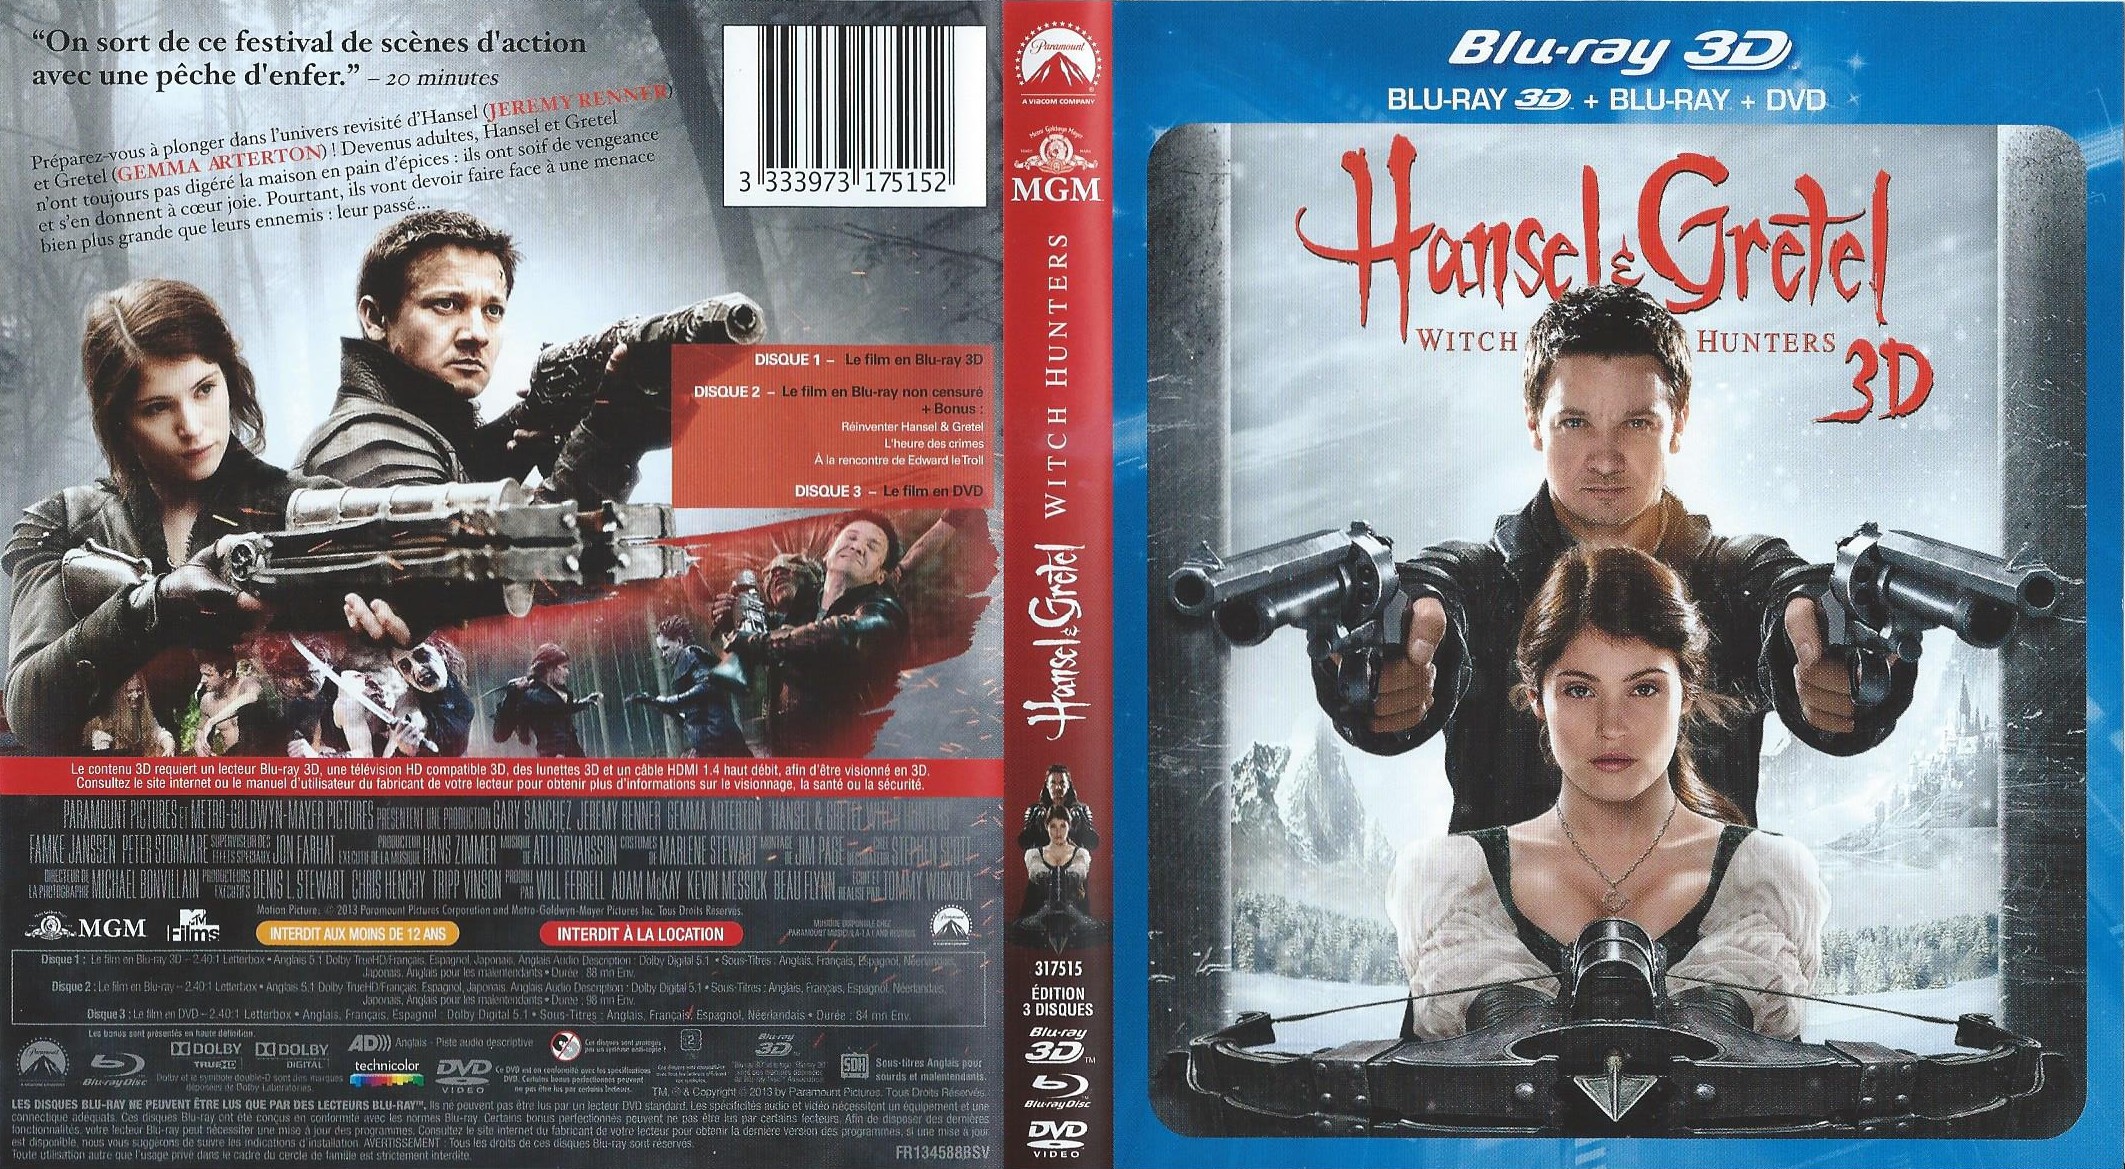 Jaquette DVD Hansel et Gretel Witch Hunters (BLU-RAY) v2